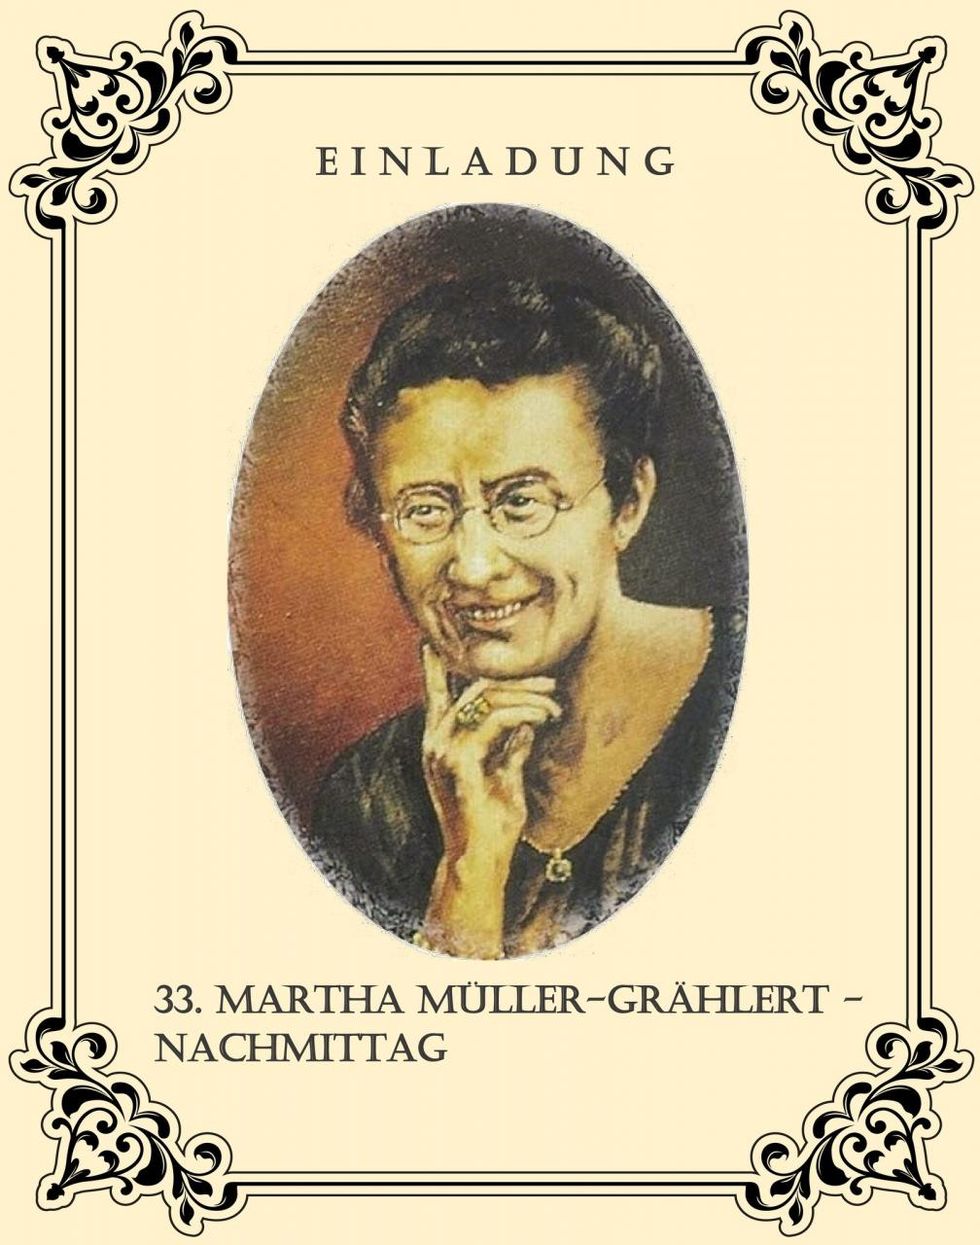 33 Martha Müller-Grählert Afternoon